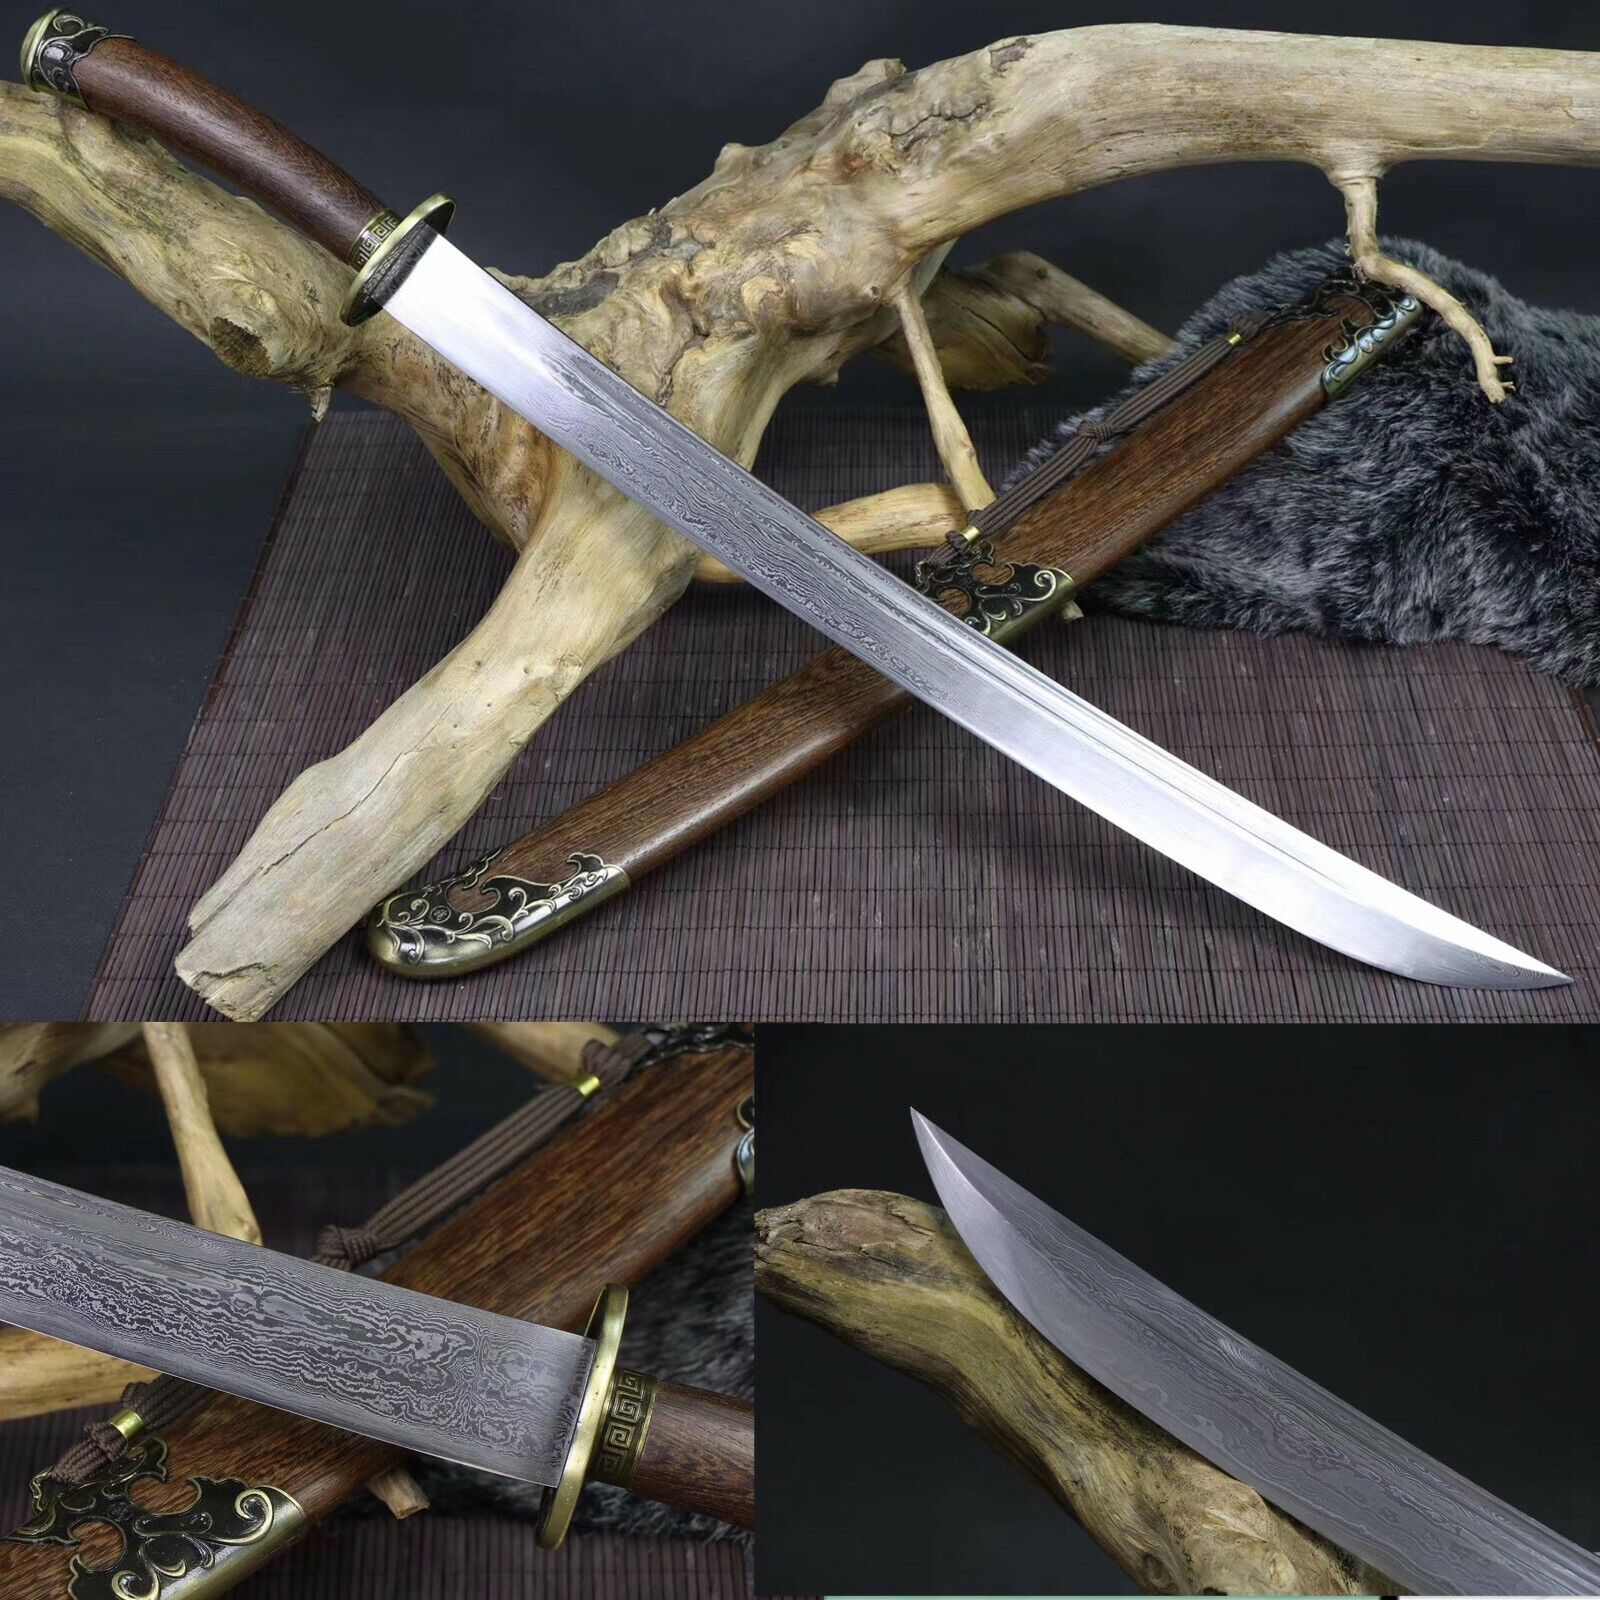 100% Handmade Chinese Sword Damascus Folded Steel Qing Dynasty Sword Sharp Blade